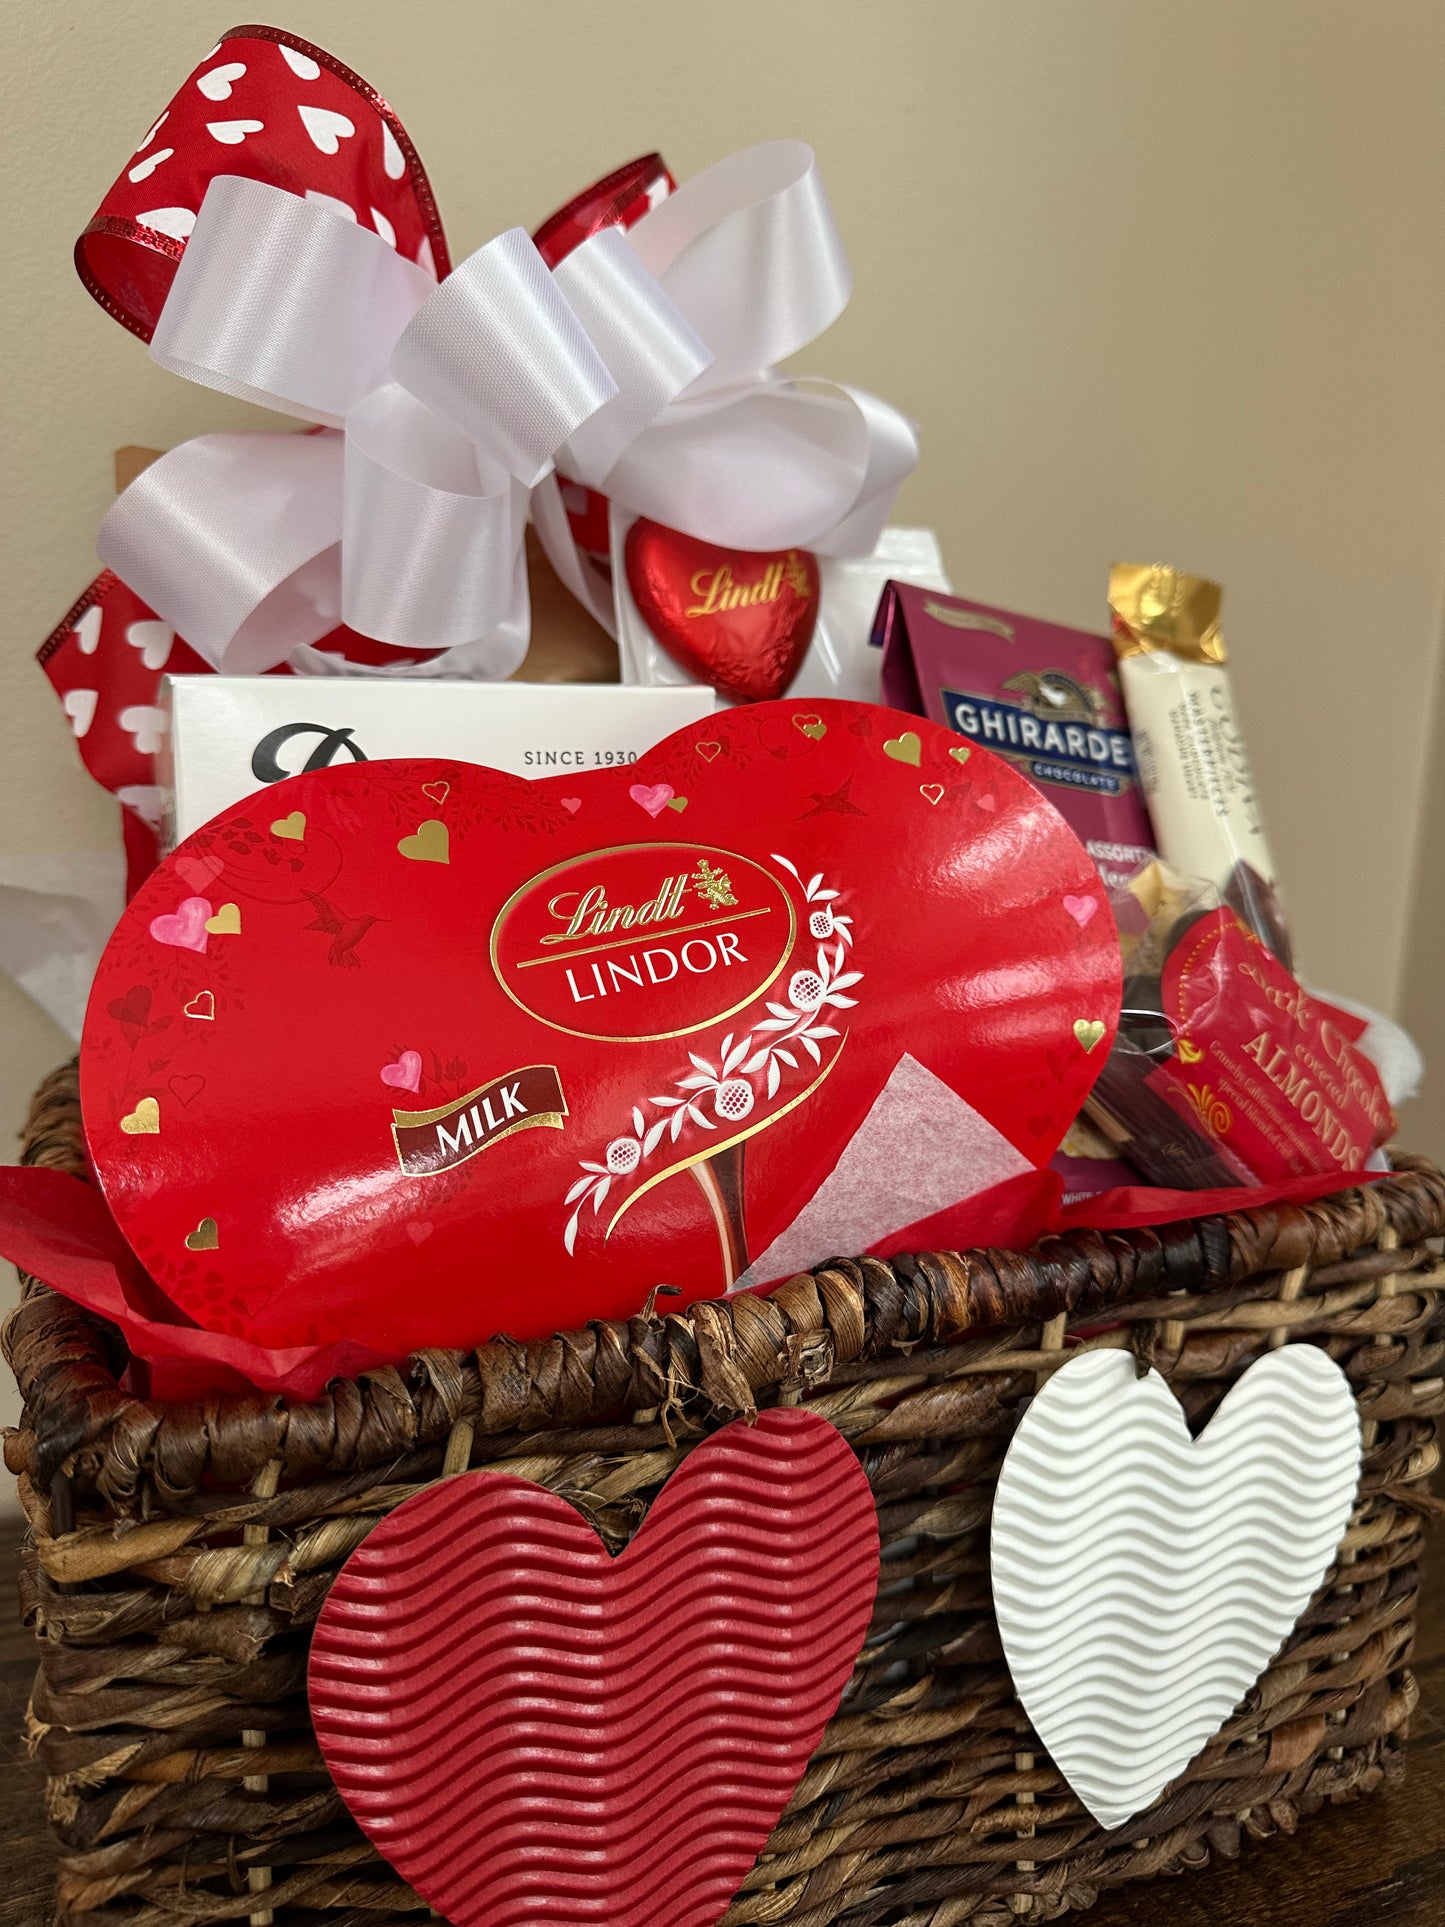 Sweet and Savory Valentine Basket – A Gift Basket Full by Carolina